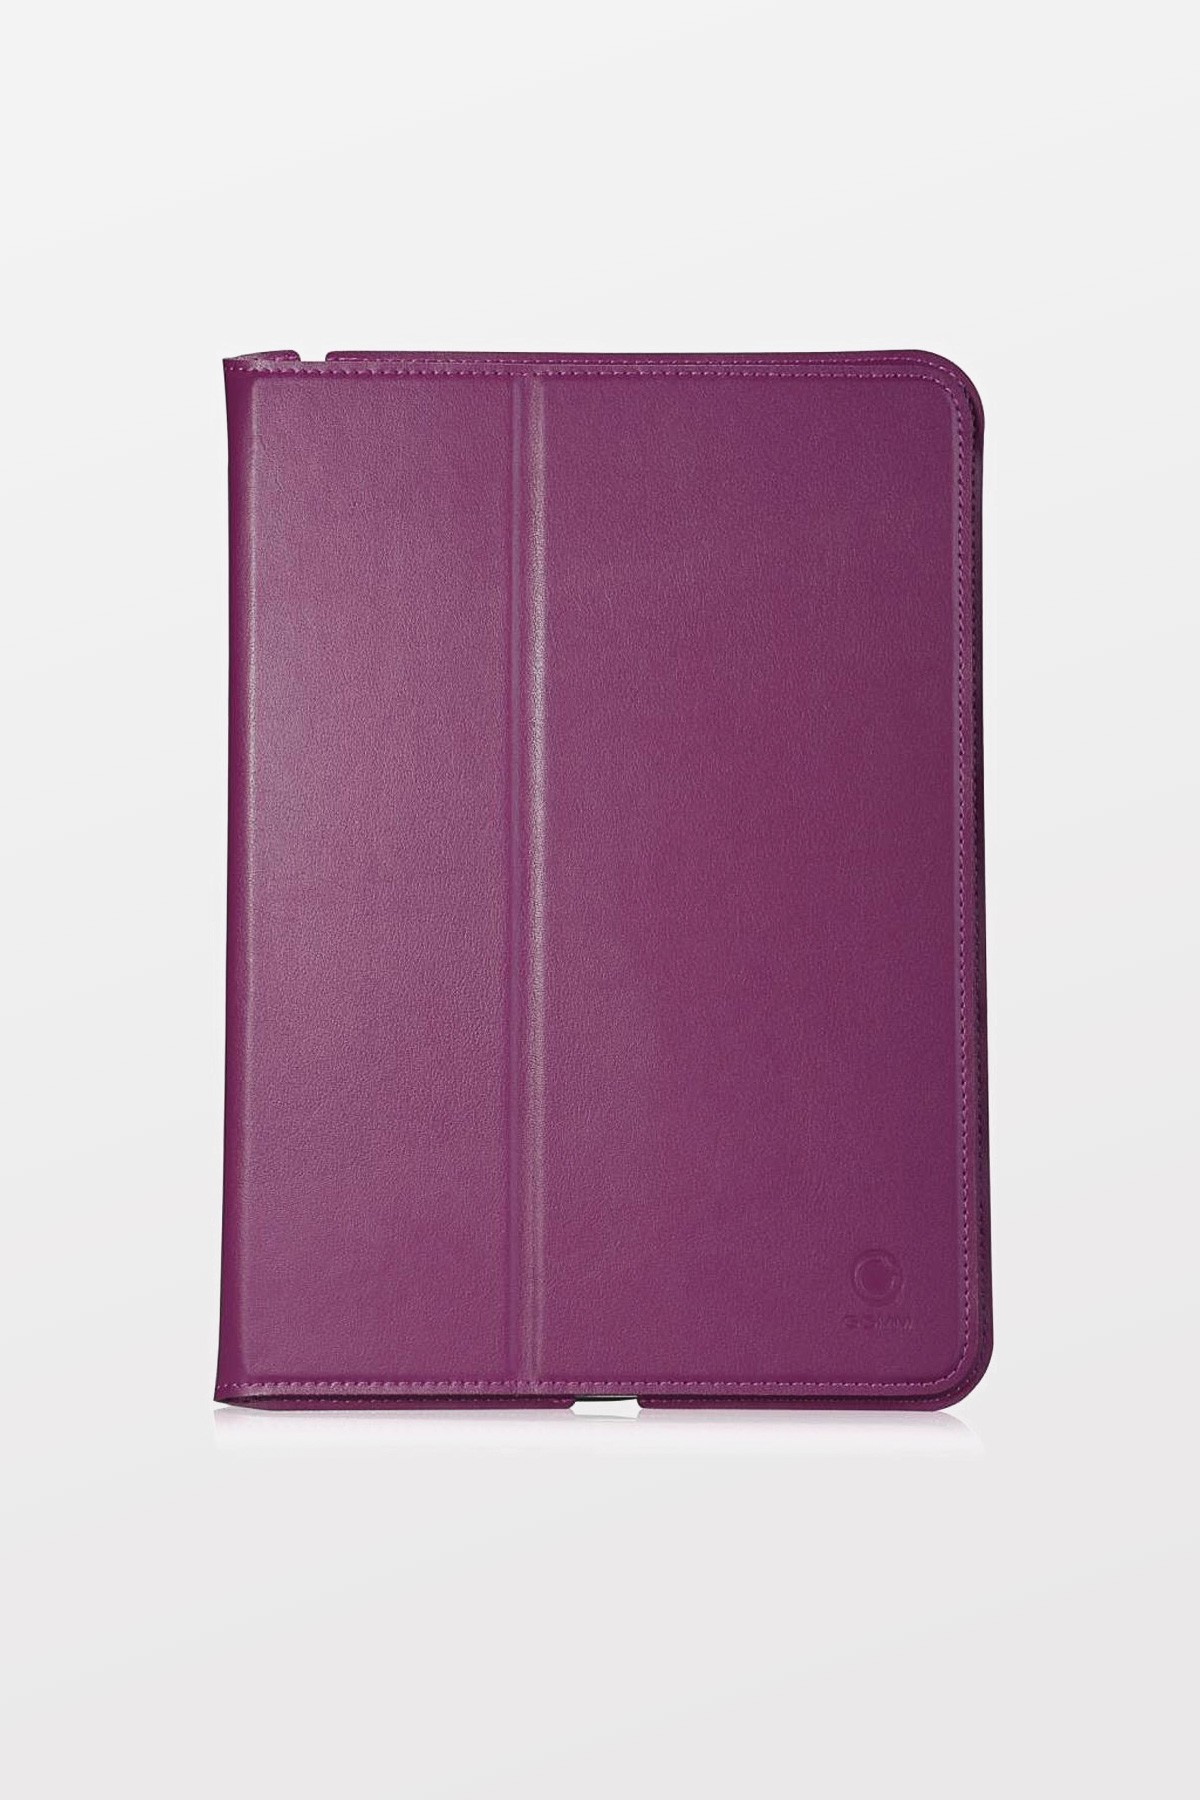 GGMM IntelliFolio-IA Case for iPad Air - Purple